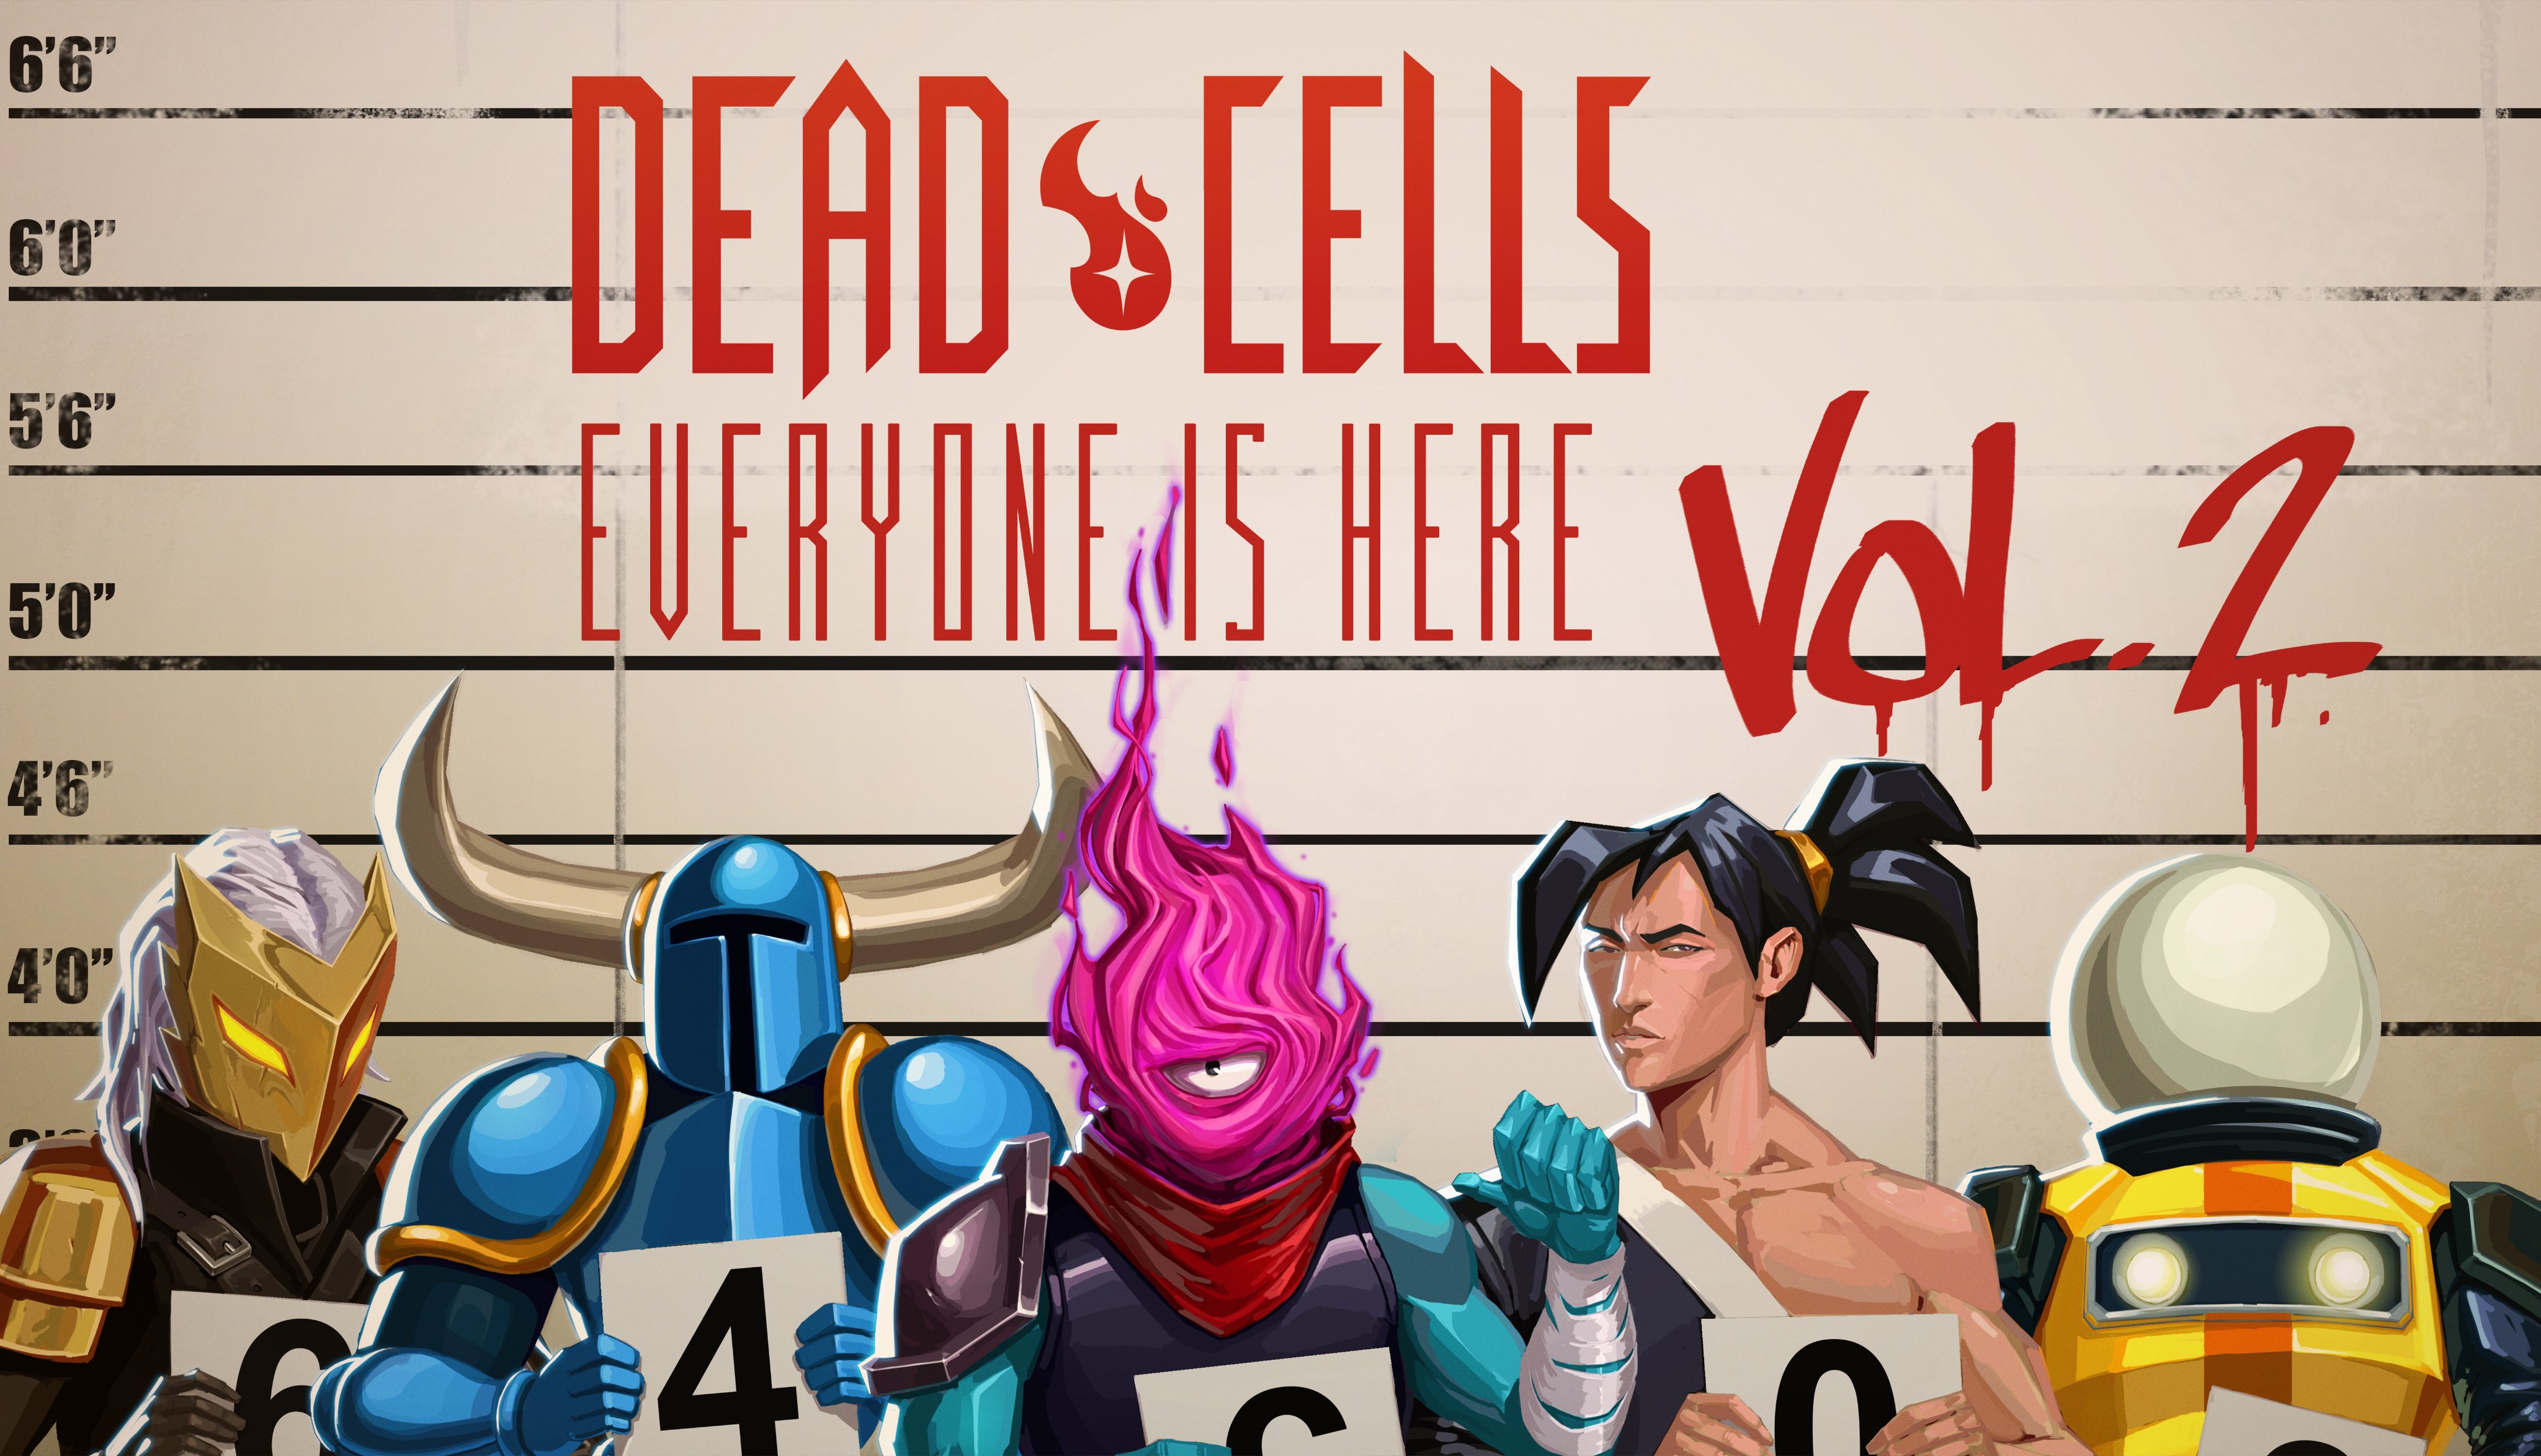 Dead Cells Apk 3.2.6 Original Latest Version